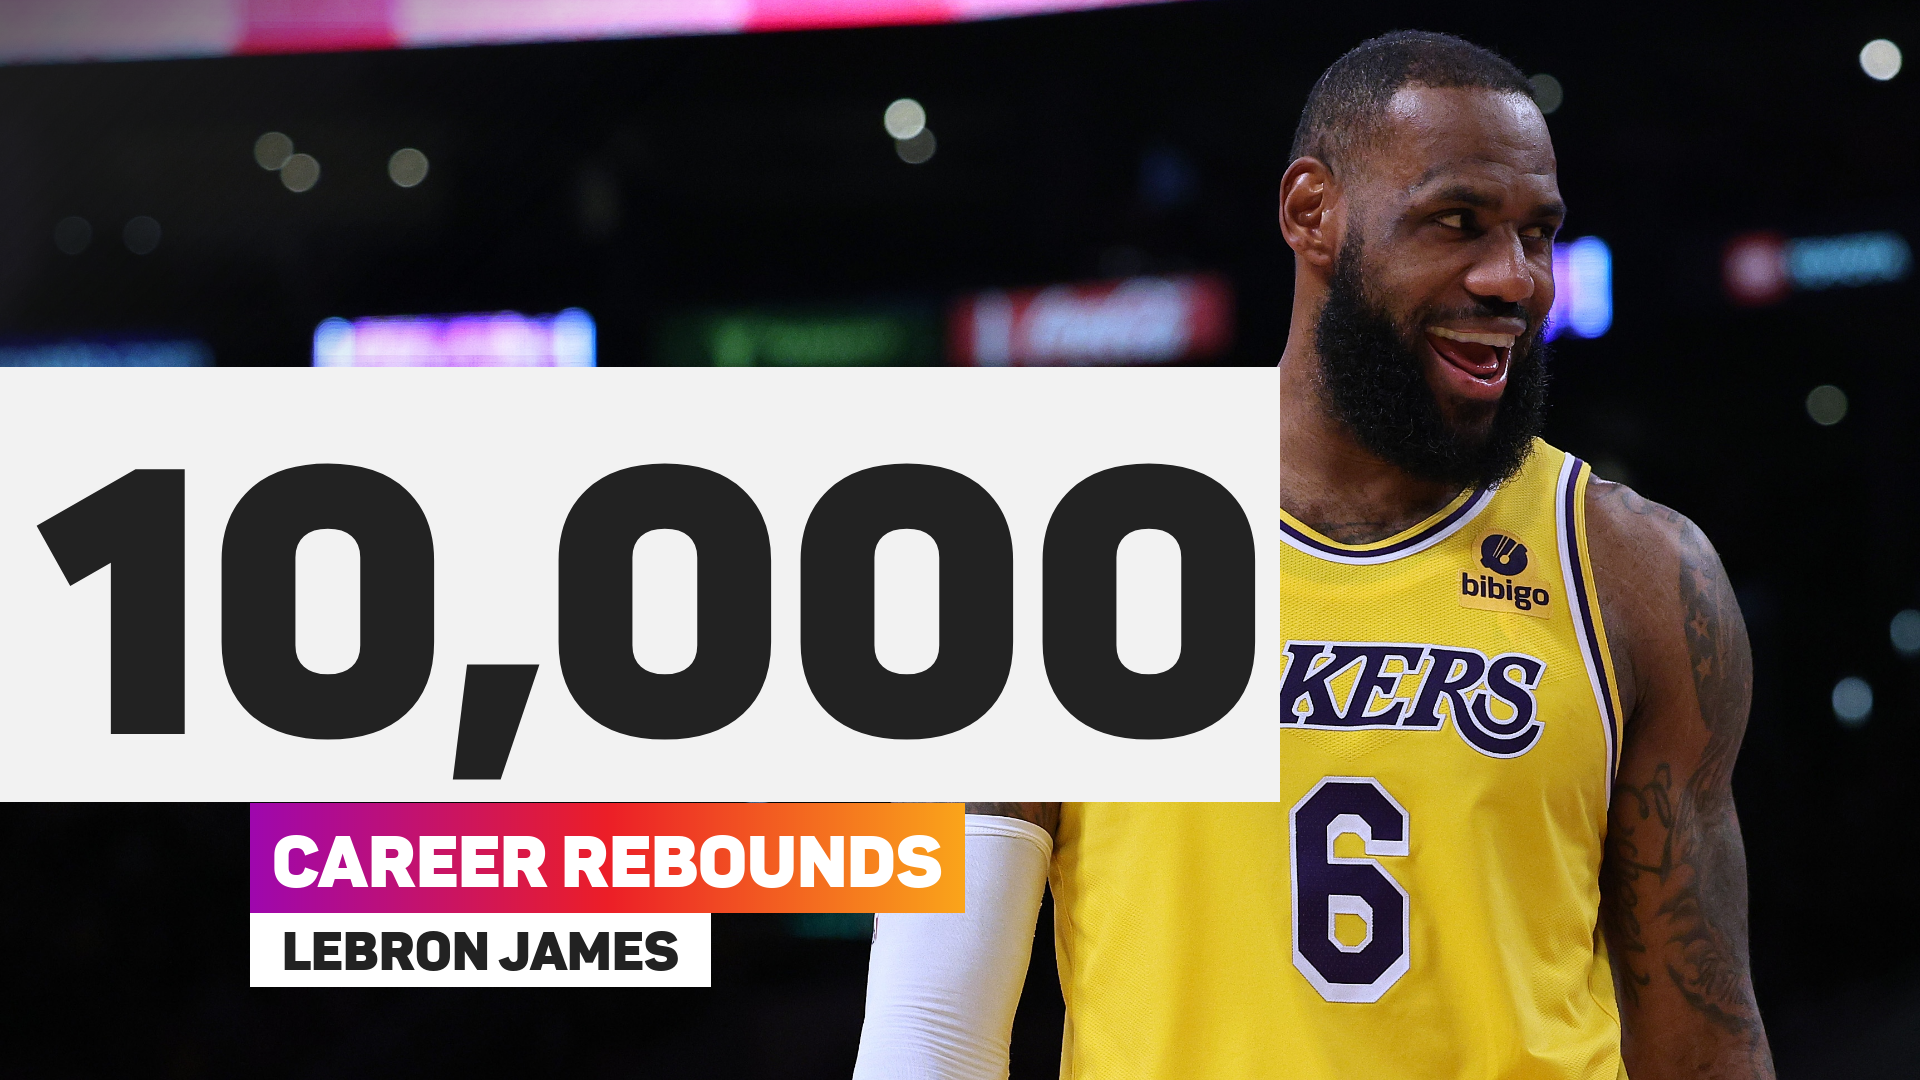 LeBron James' 10,000th regular-season rebound came in a defeat